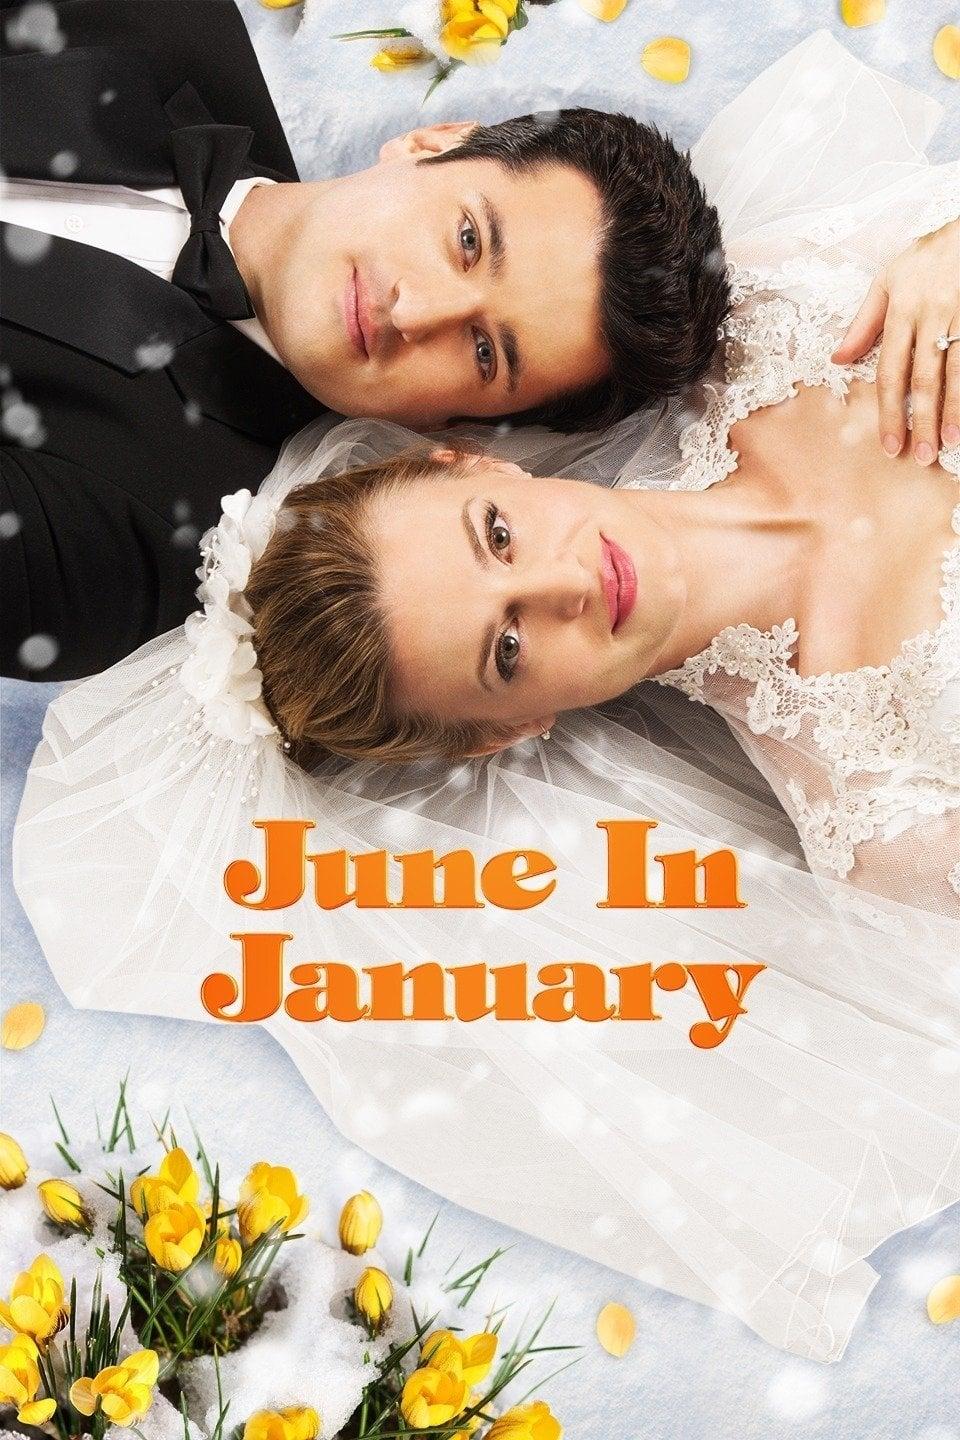 June in January poster